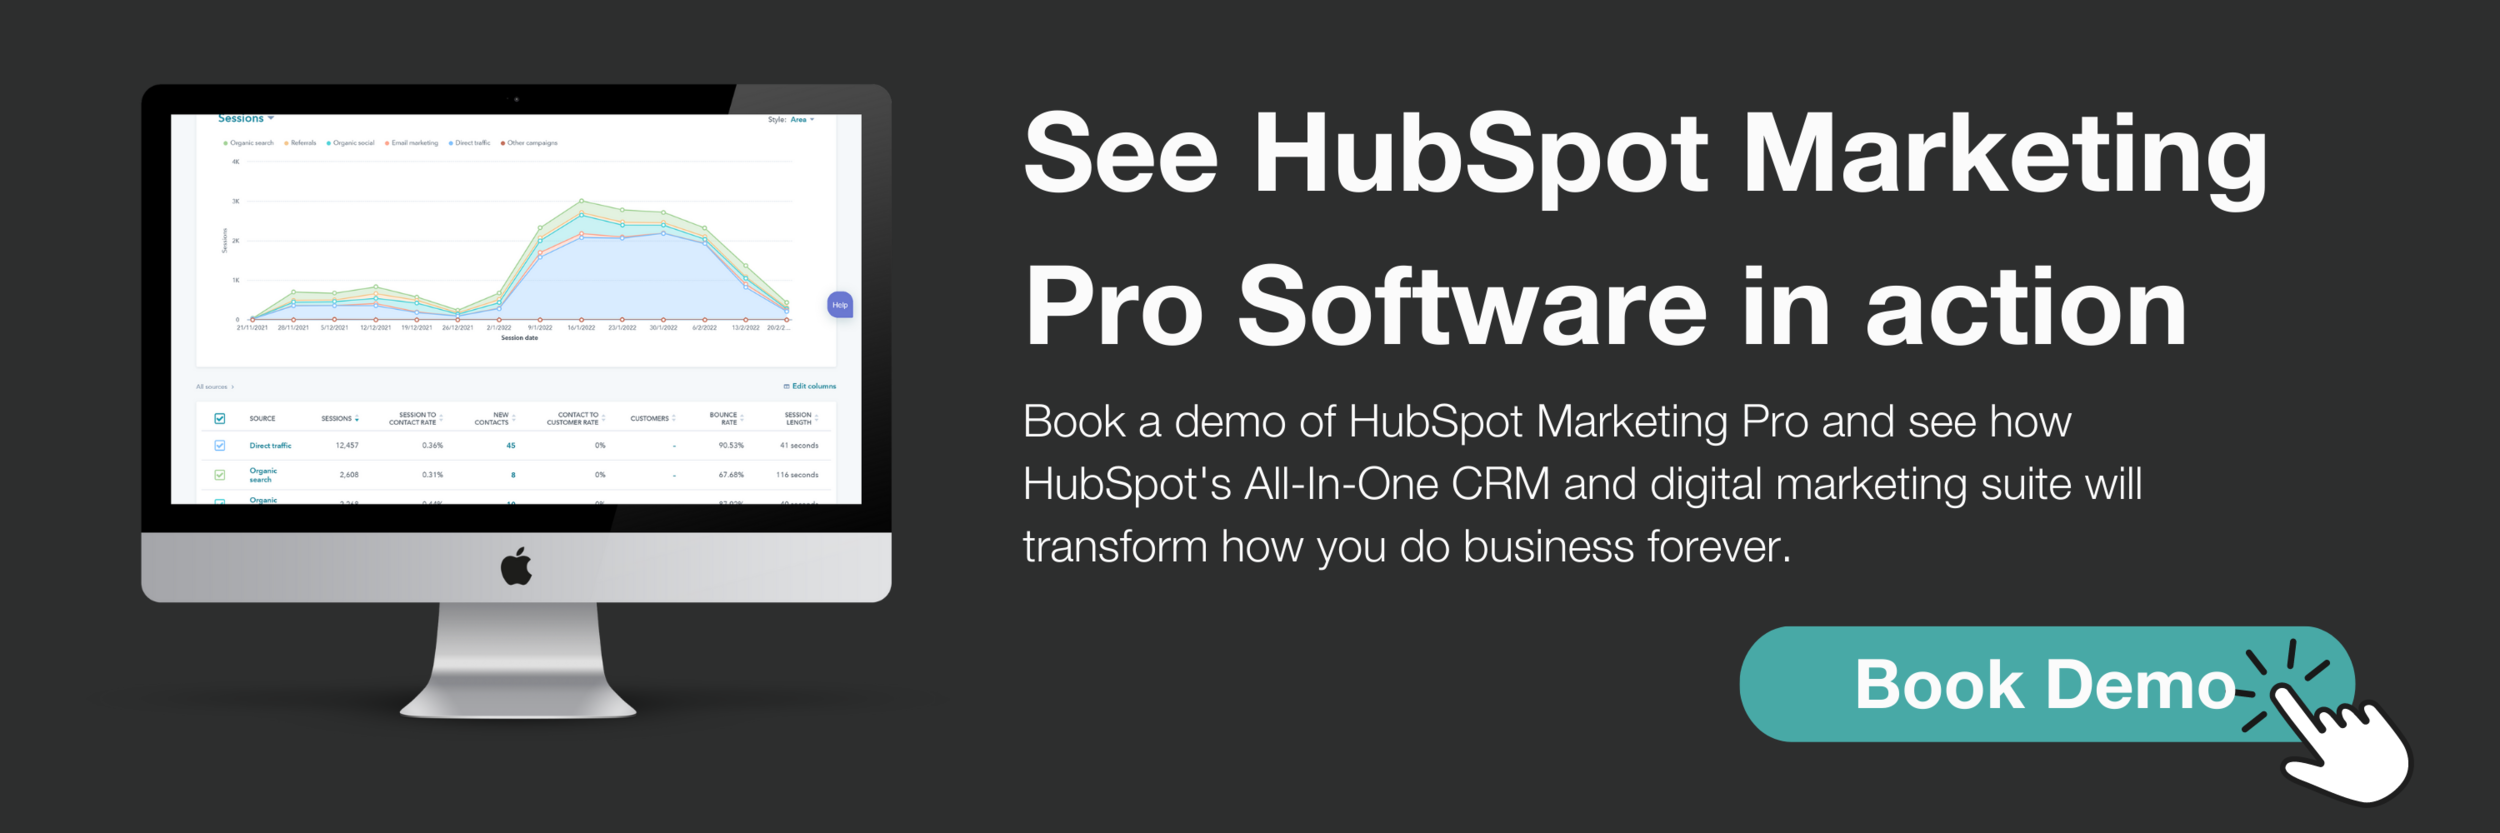 Book a demo of HubSpot Marketing Pro Software